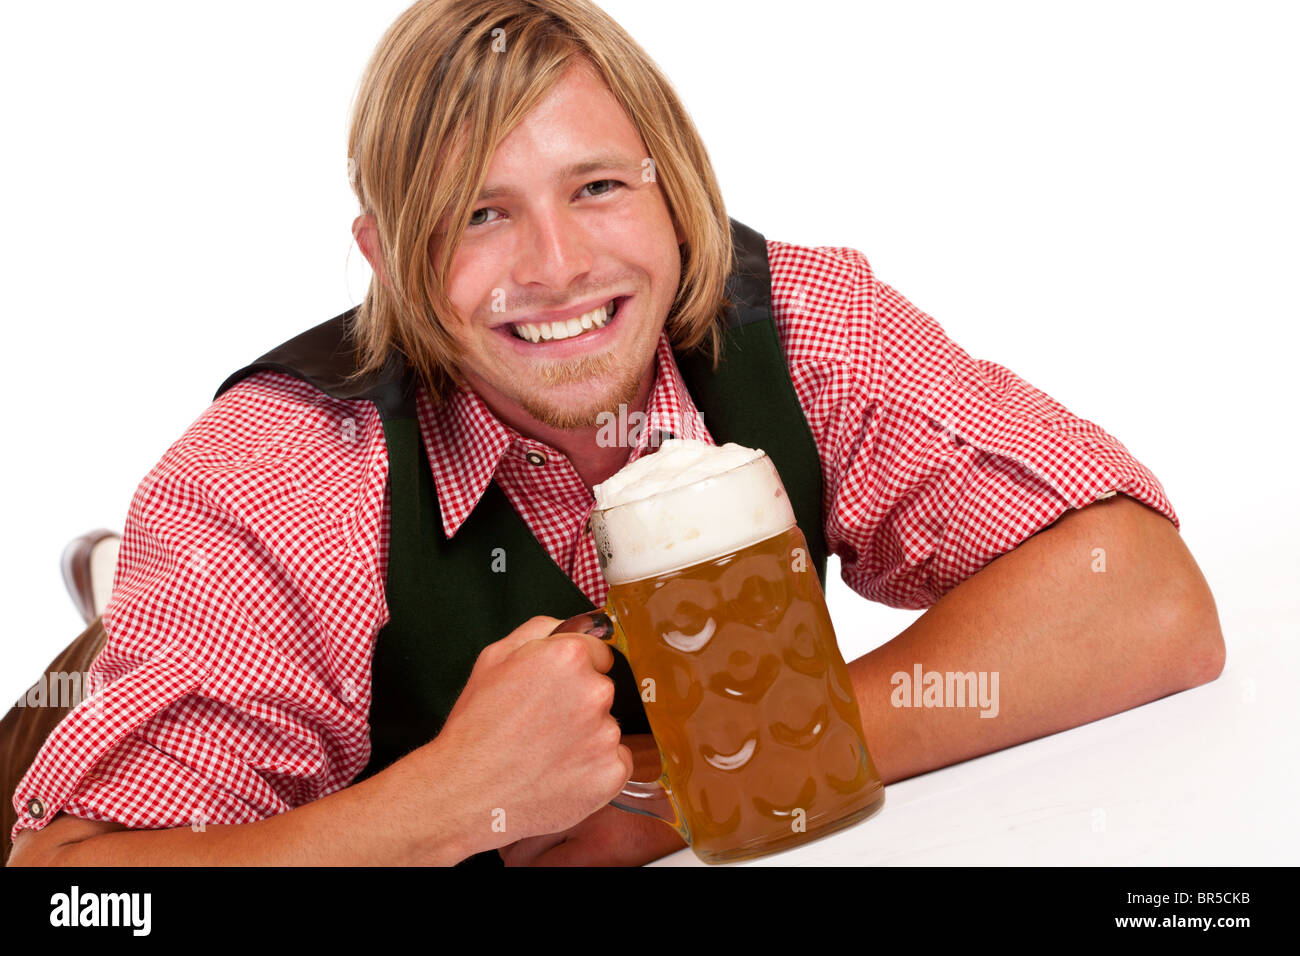 Happy man lying on floor holding Oktoberfest beer stein. Isolated on white background. Stock Photo